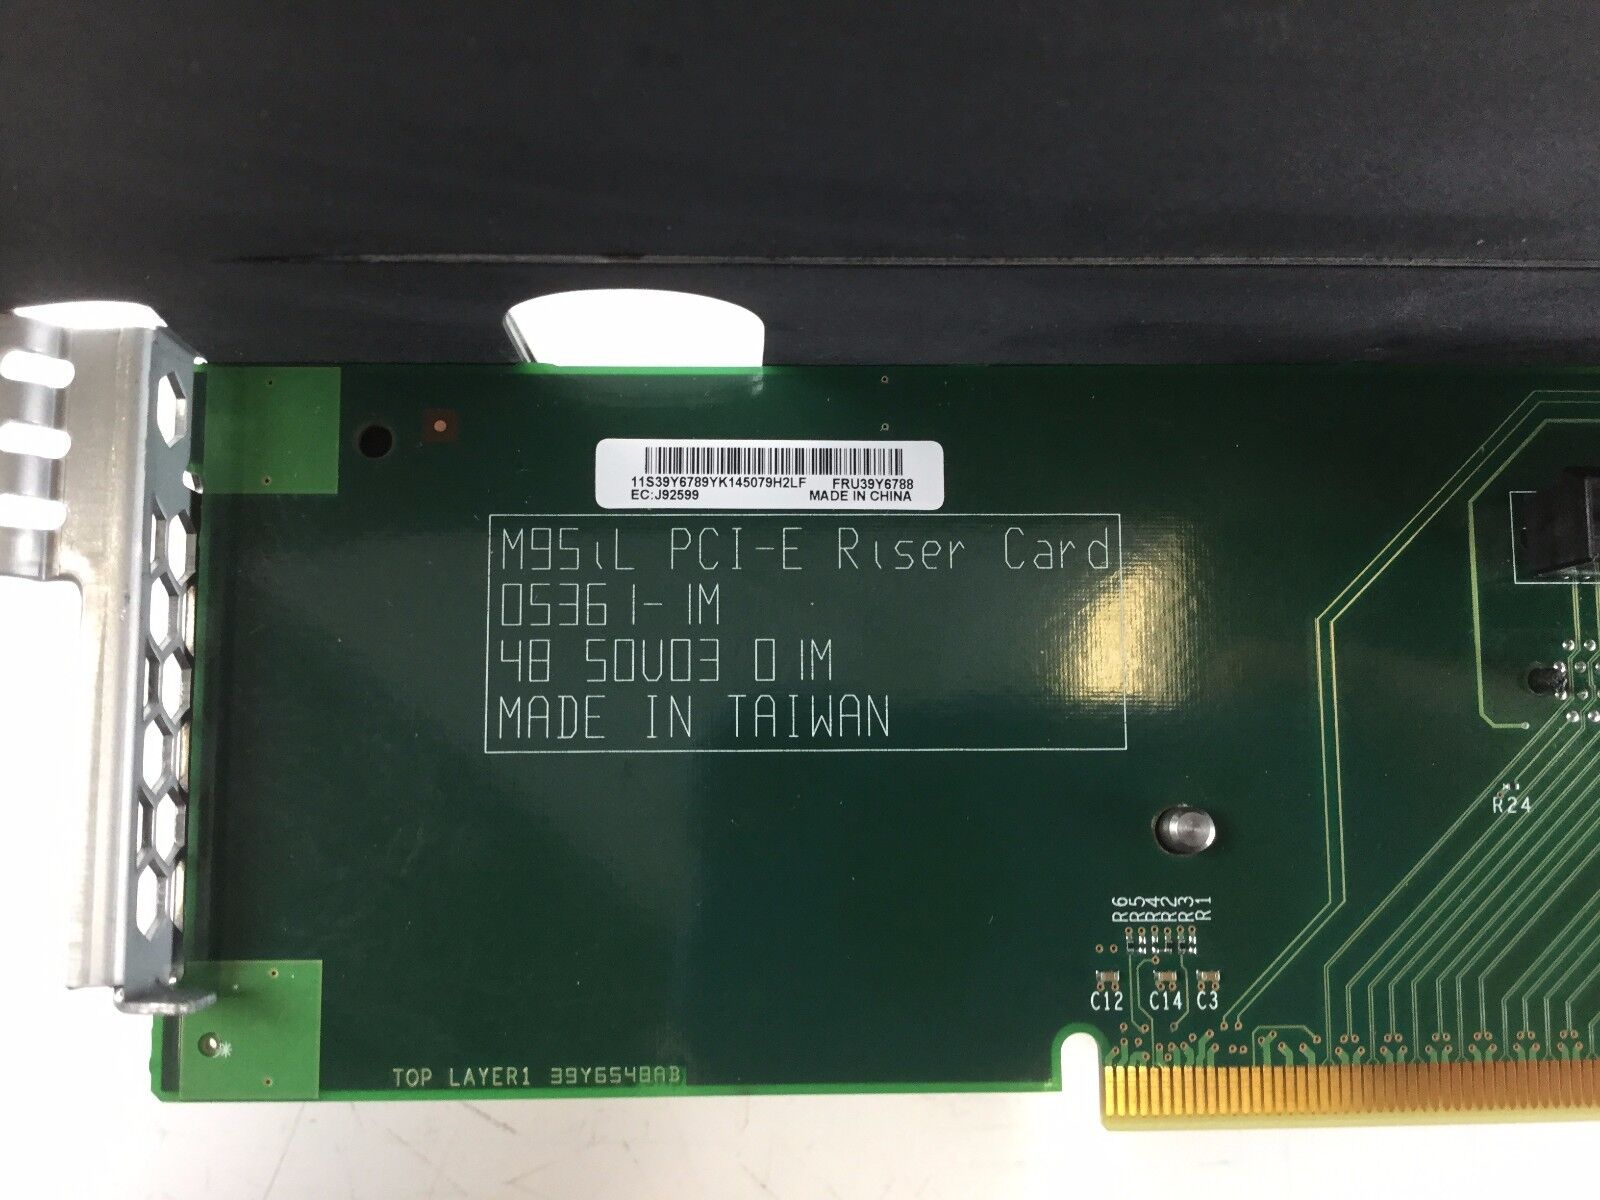 IBM 39M6798 x3650 Server PCI-e Riser Card Tray